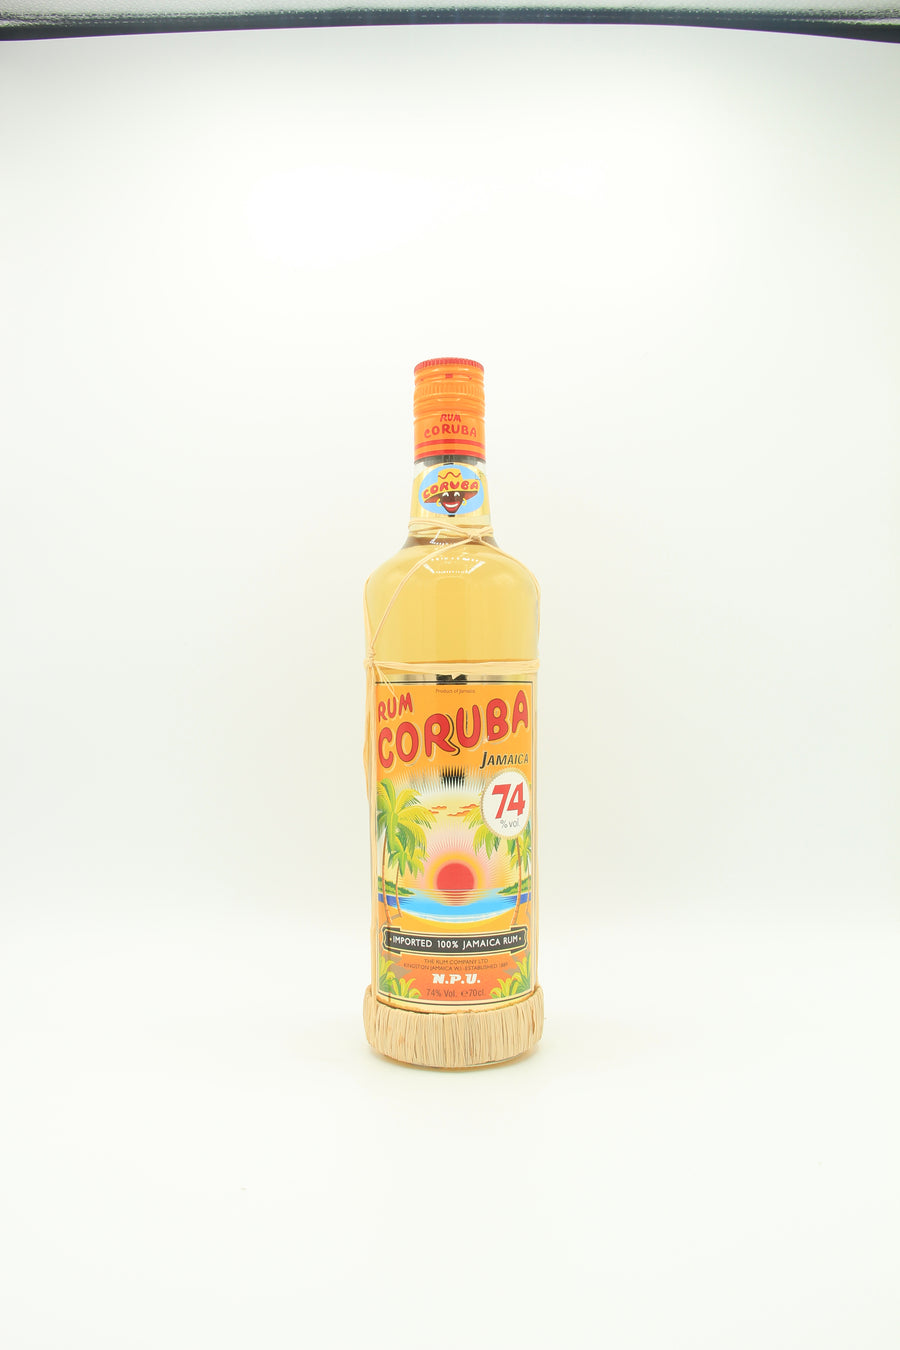 Coruba Jamaican Rum 74%